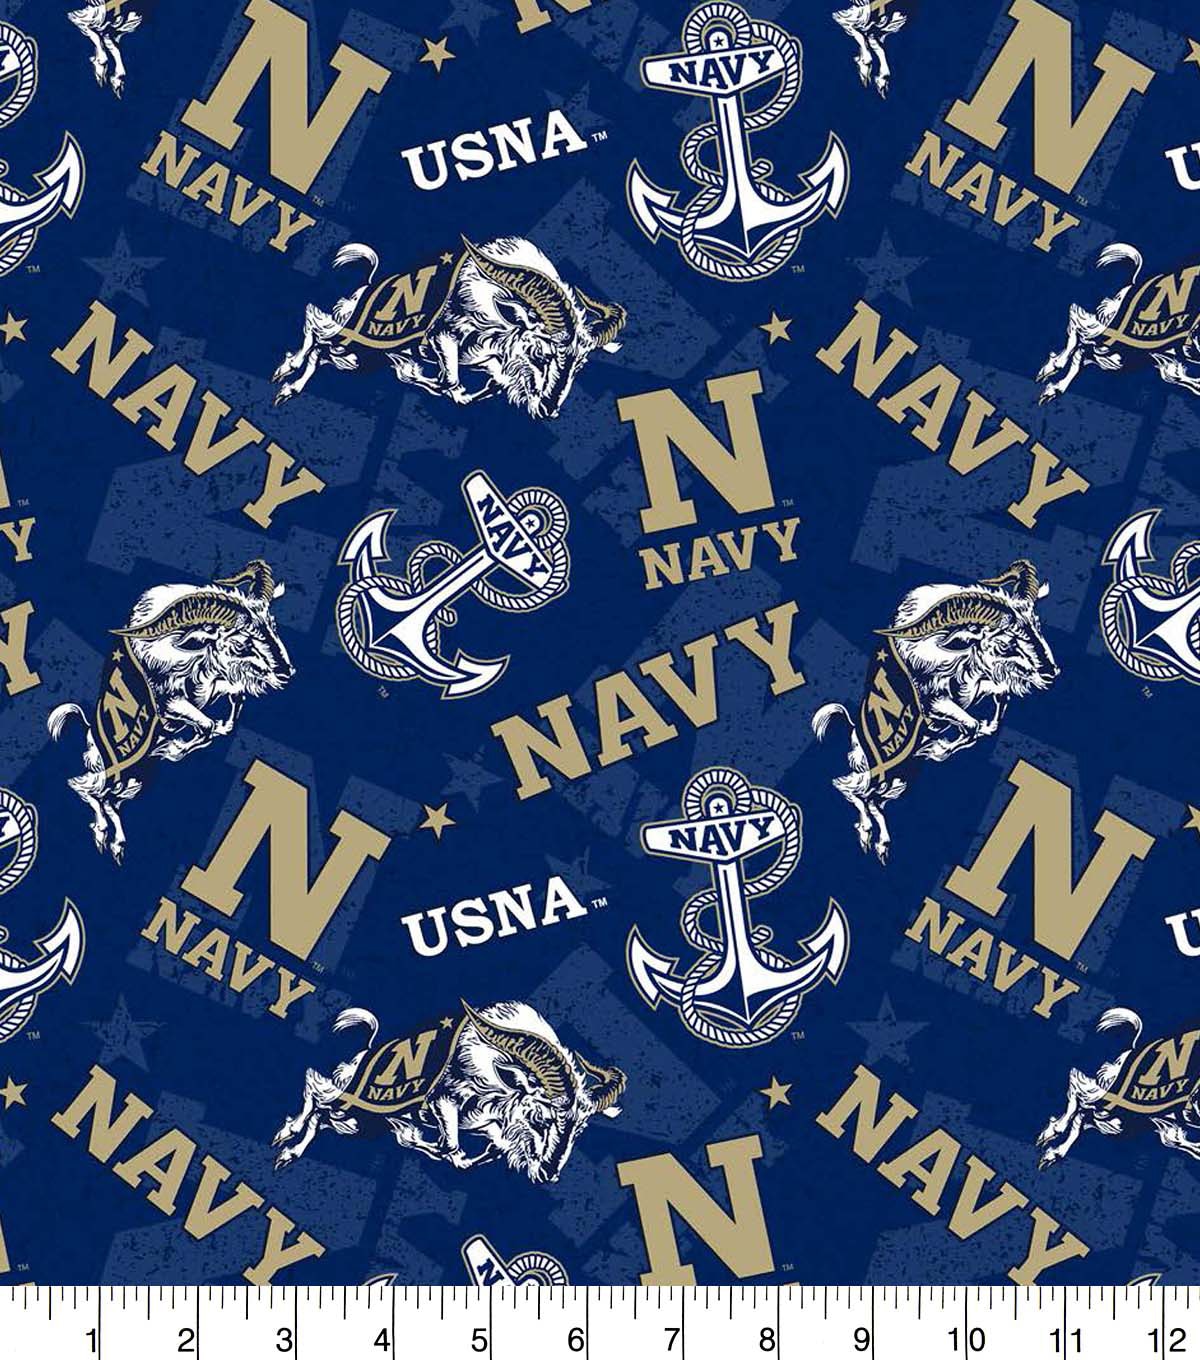 Type 2 Sheet United States Naval Academy Usna Midshipmen Ncaa Navy Sticker Vinyl Decal Laptop Water Bottle Car Scrapbook Decals Sports Outdoors Apeur Eu